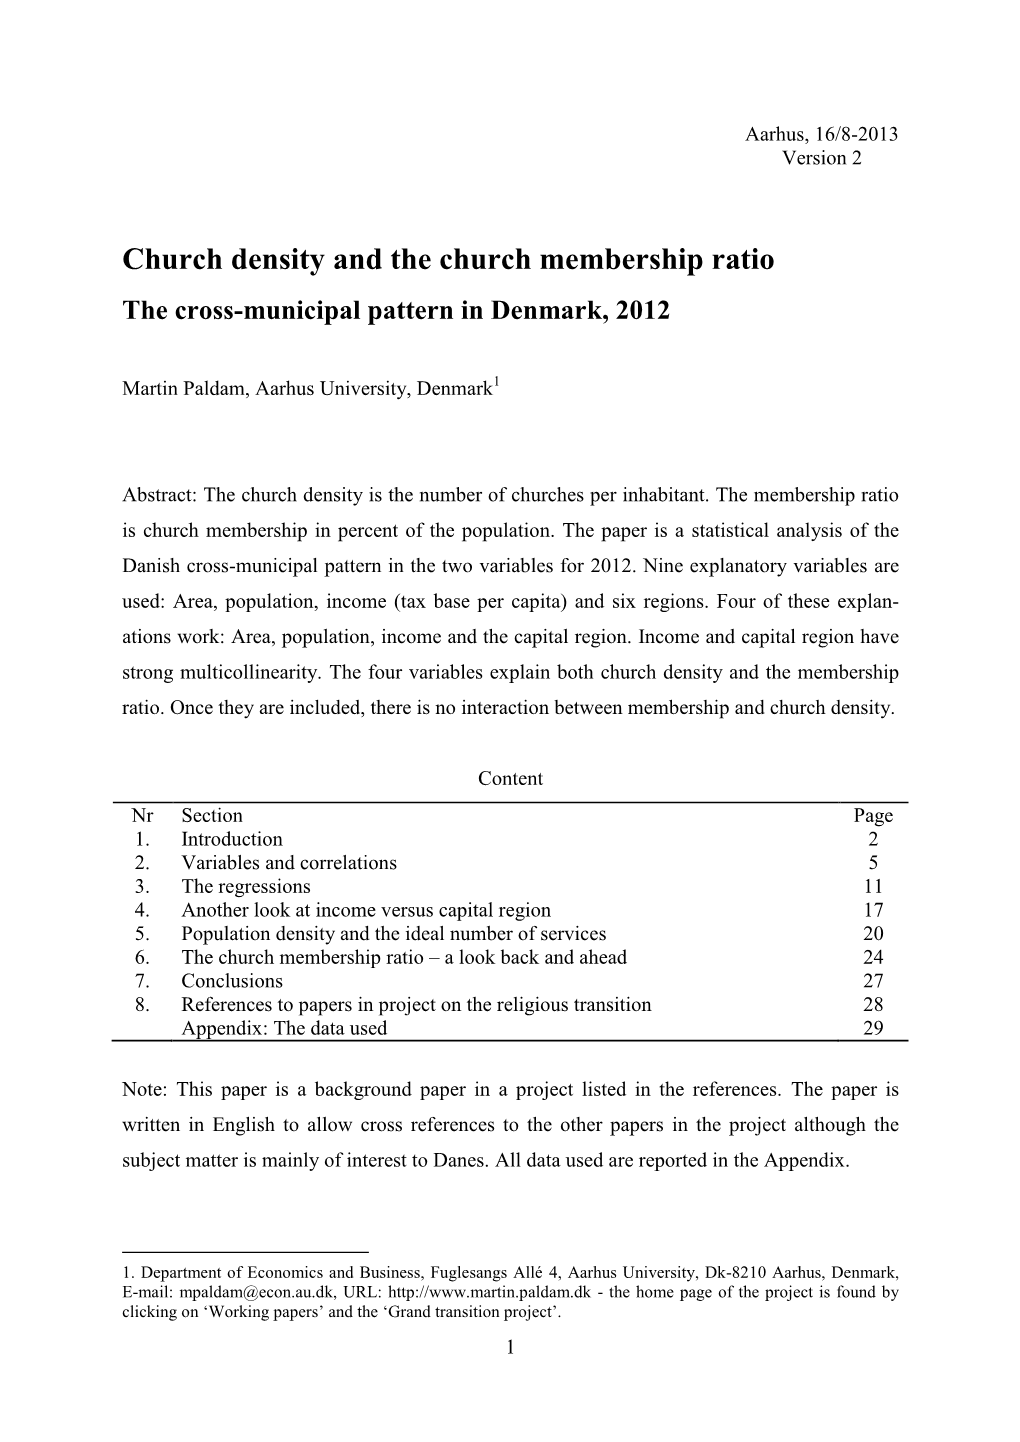 Church Density and the Church Membership Ratio the Cross-Municipal Pattern in Denmark, 2012